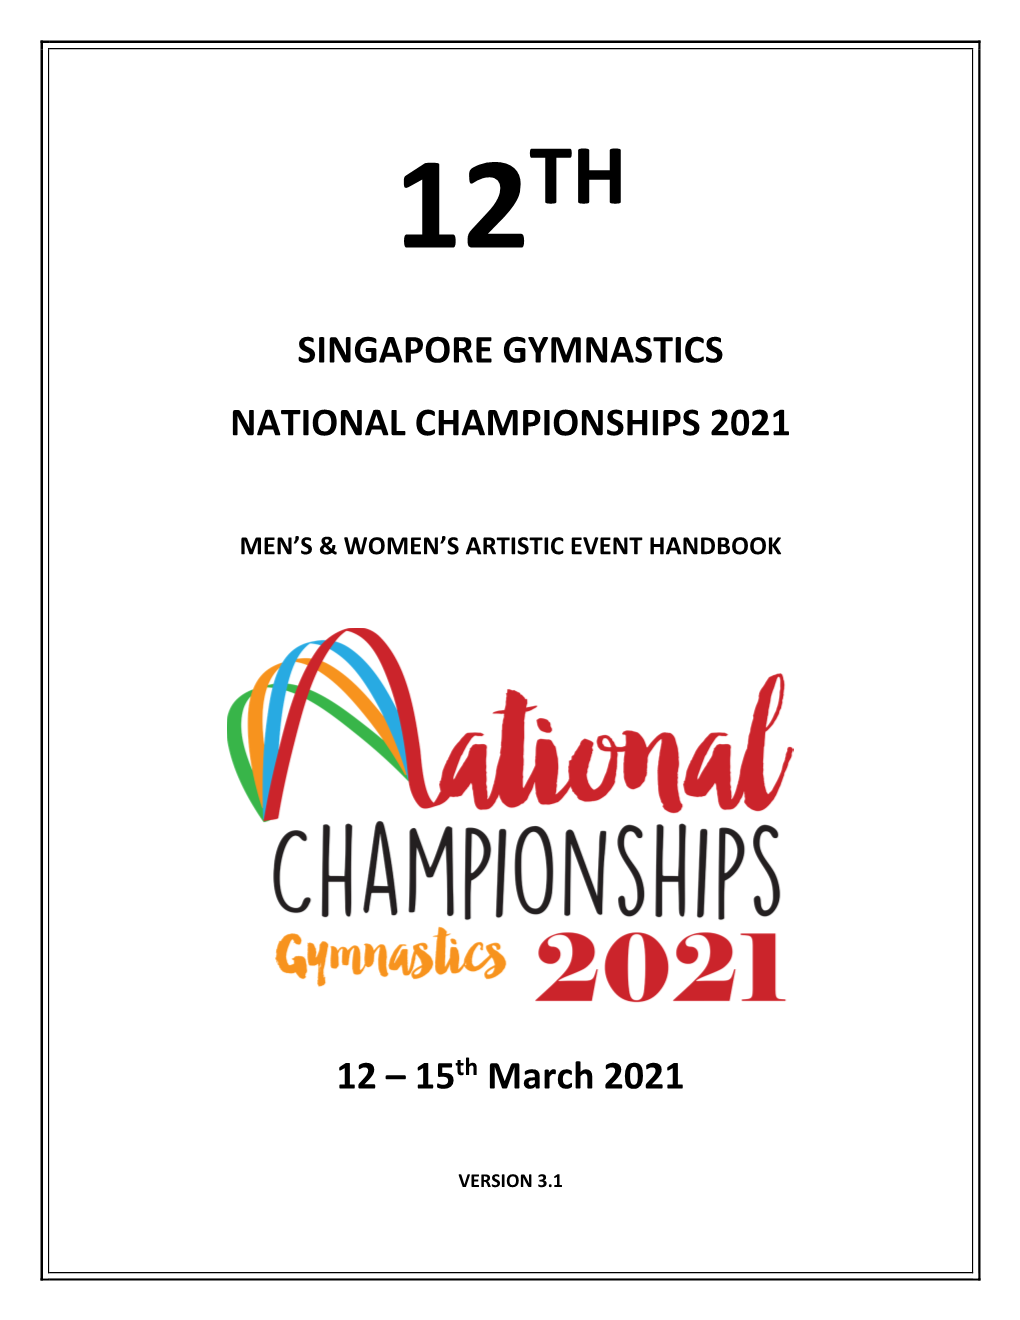 Singapore Gymnastics National Championships 2021